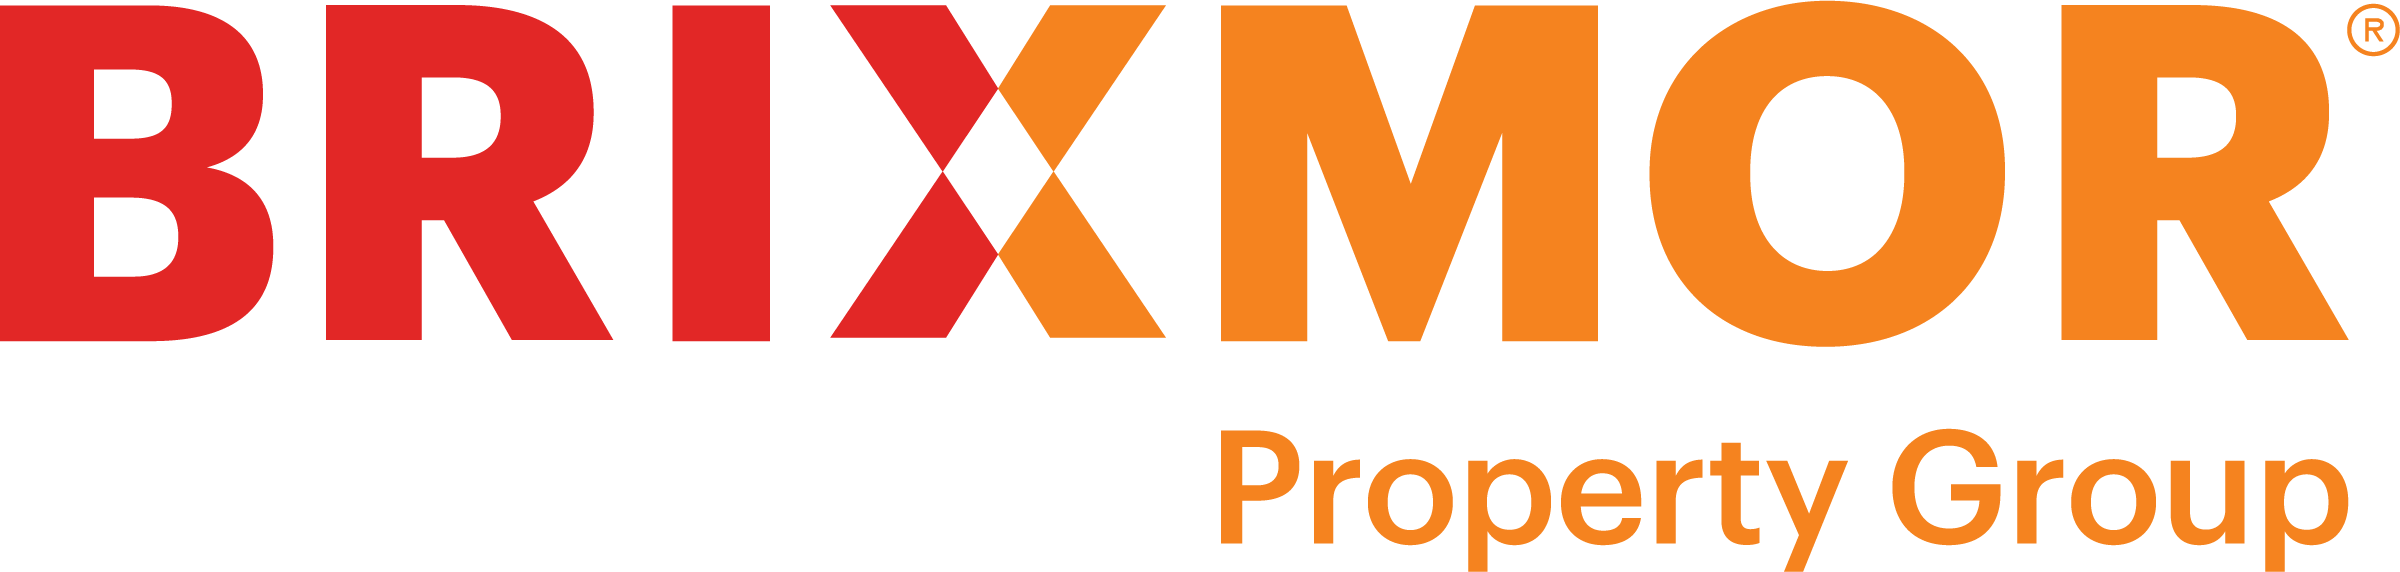 Image of Brixmor Property Group logo